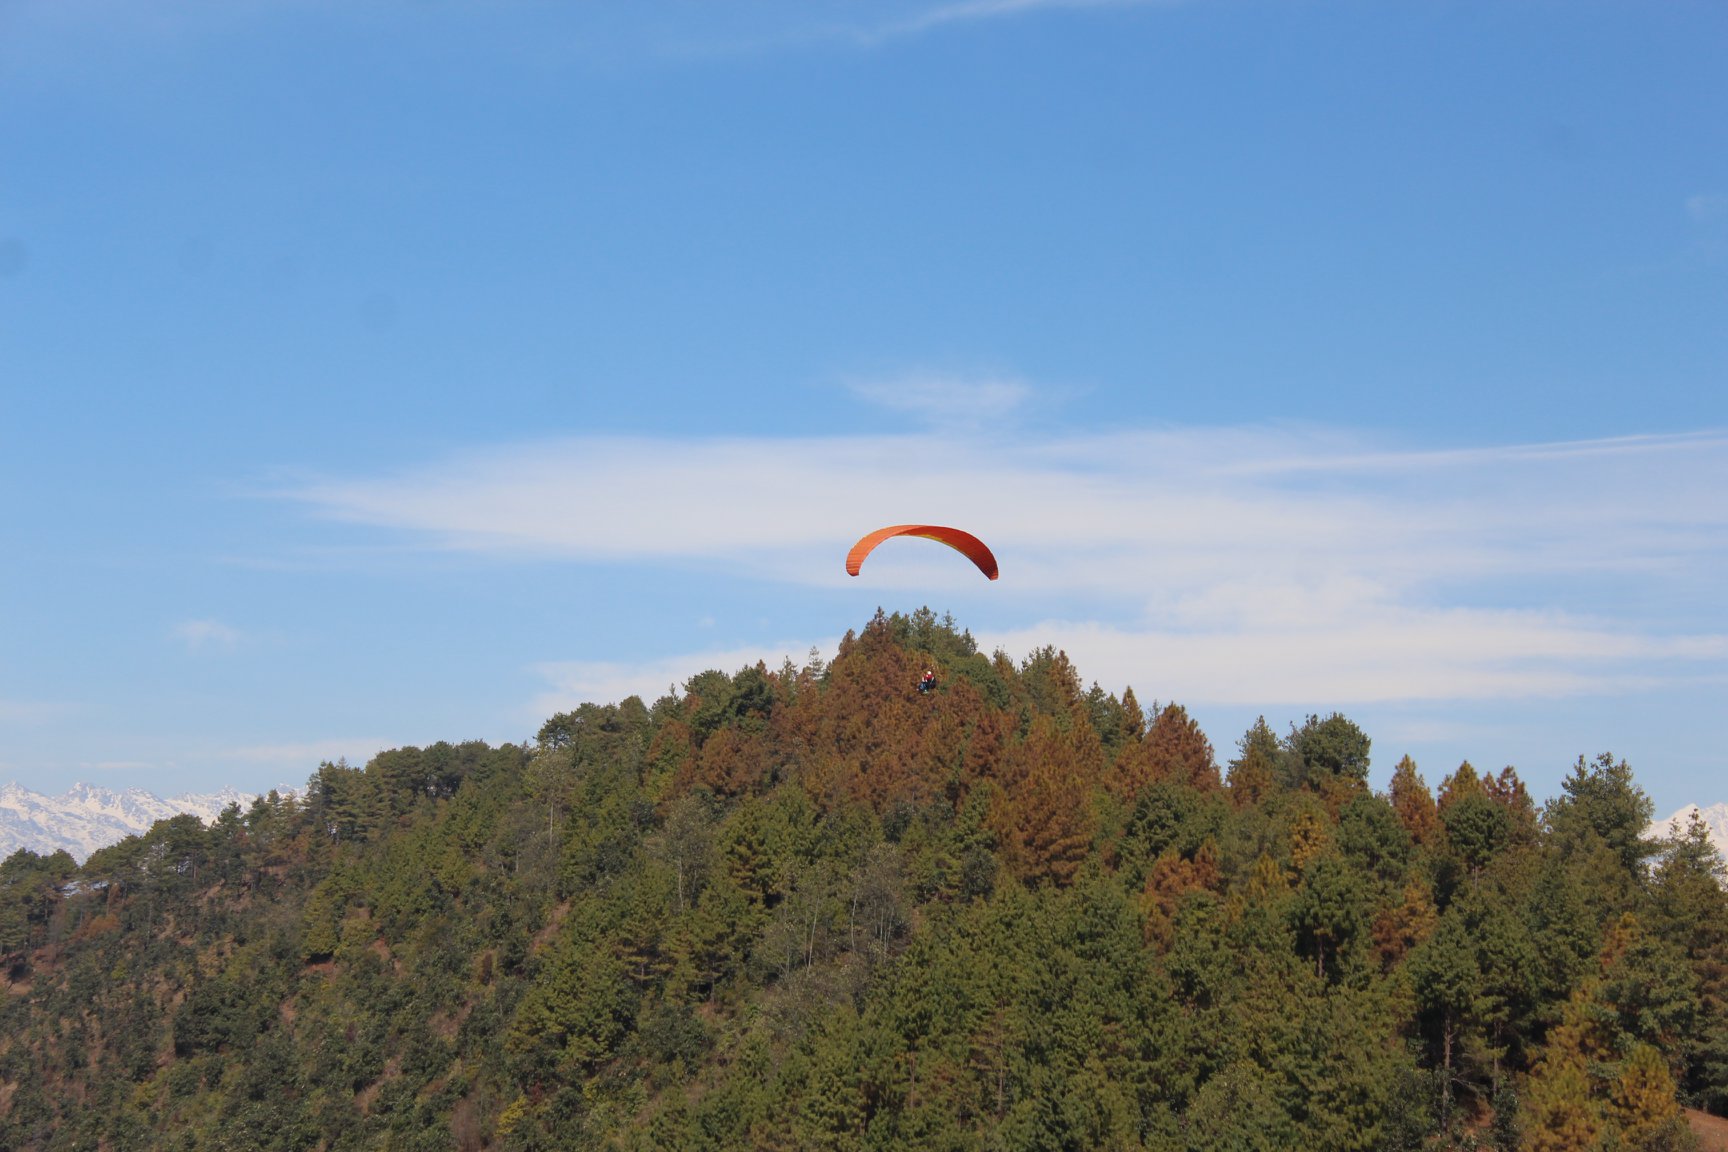 Paragliding in Kathmandu